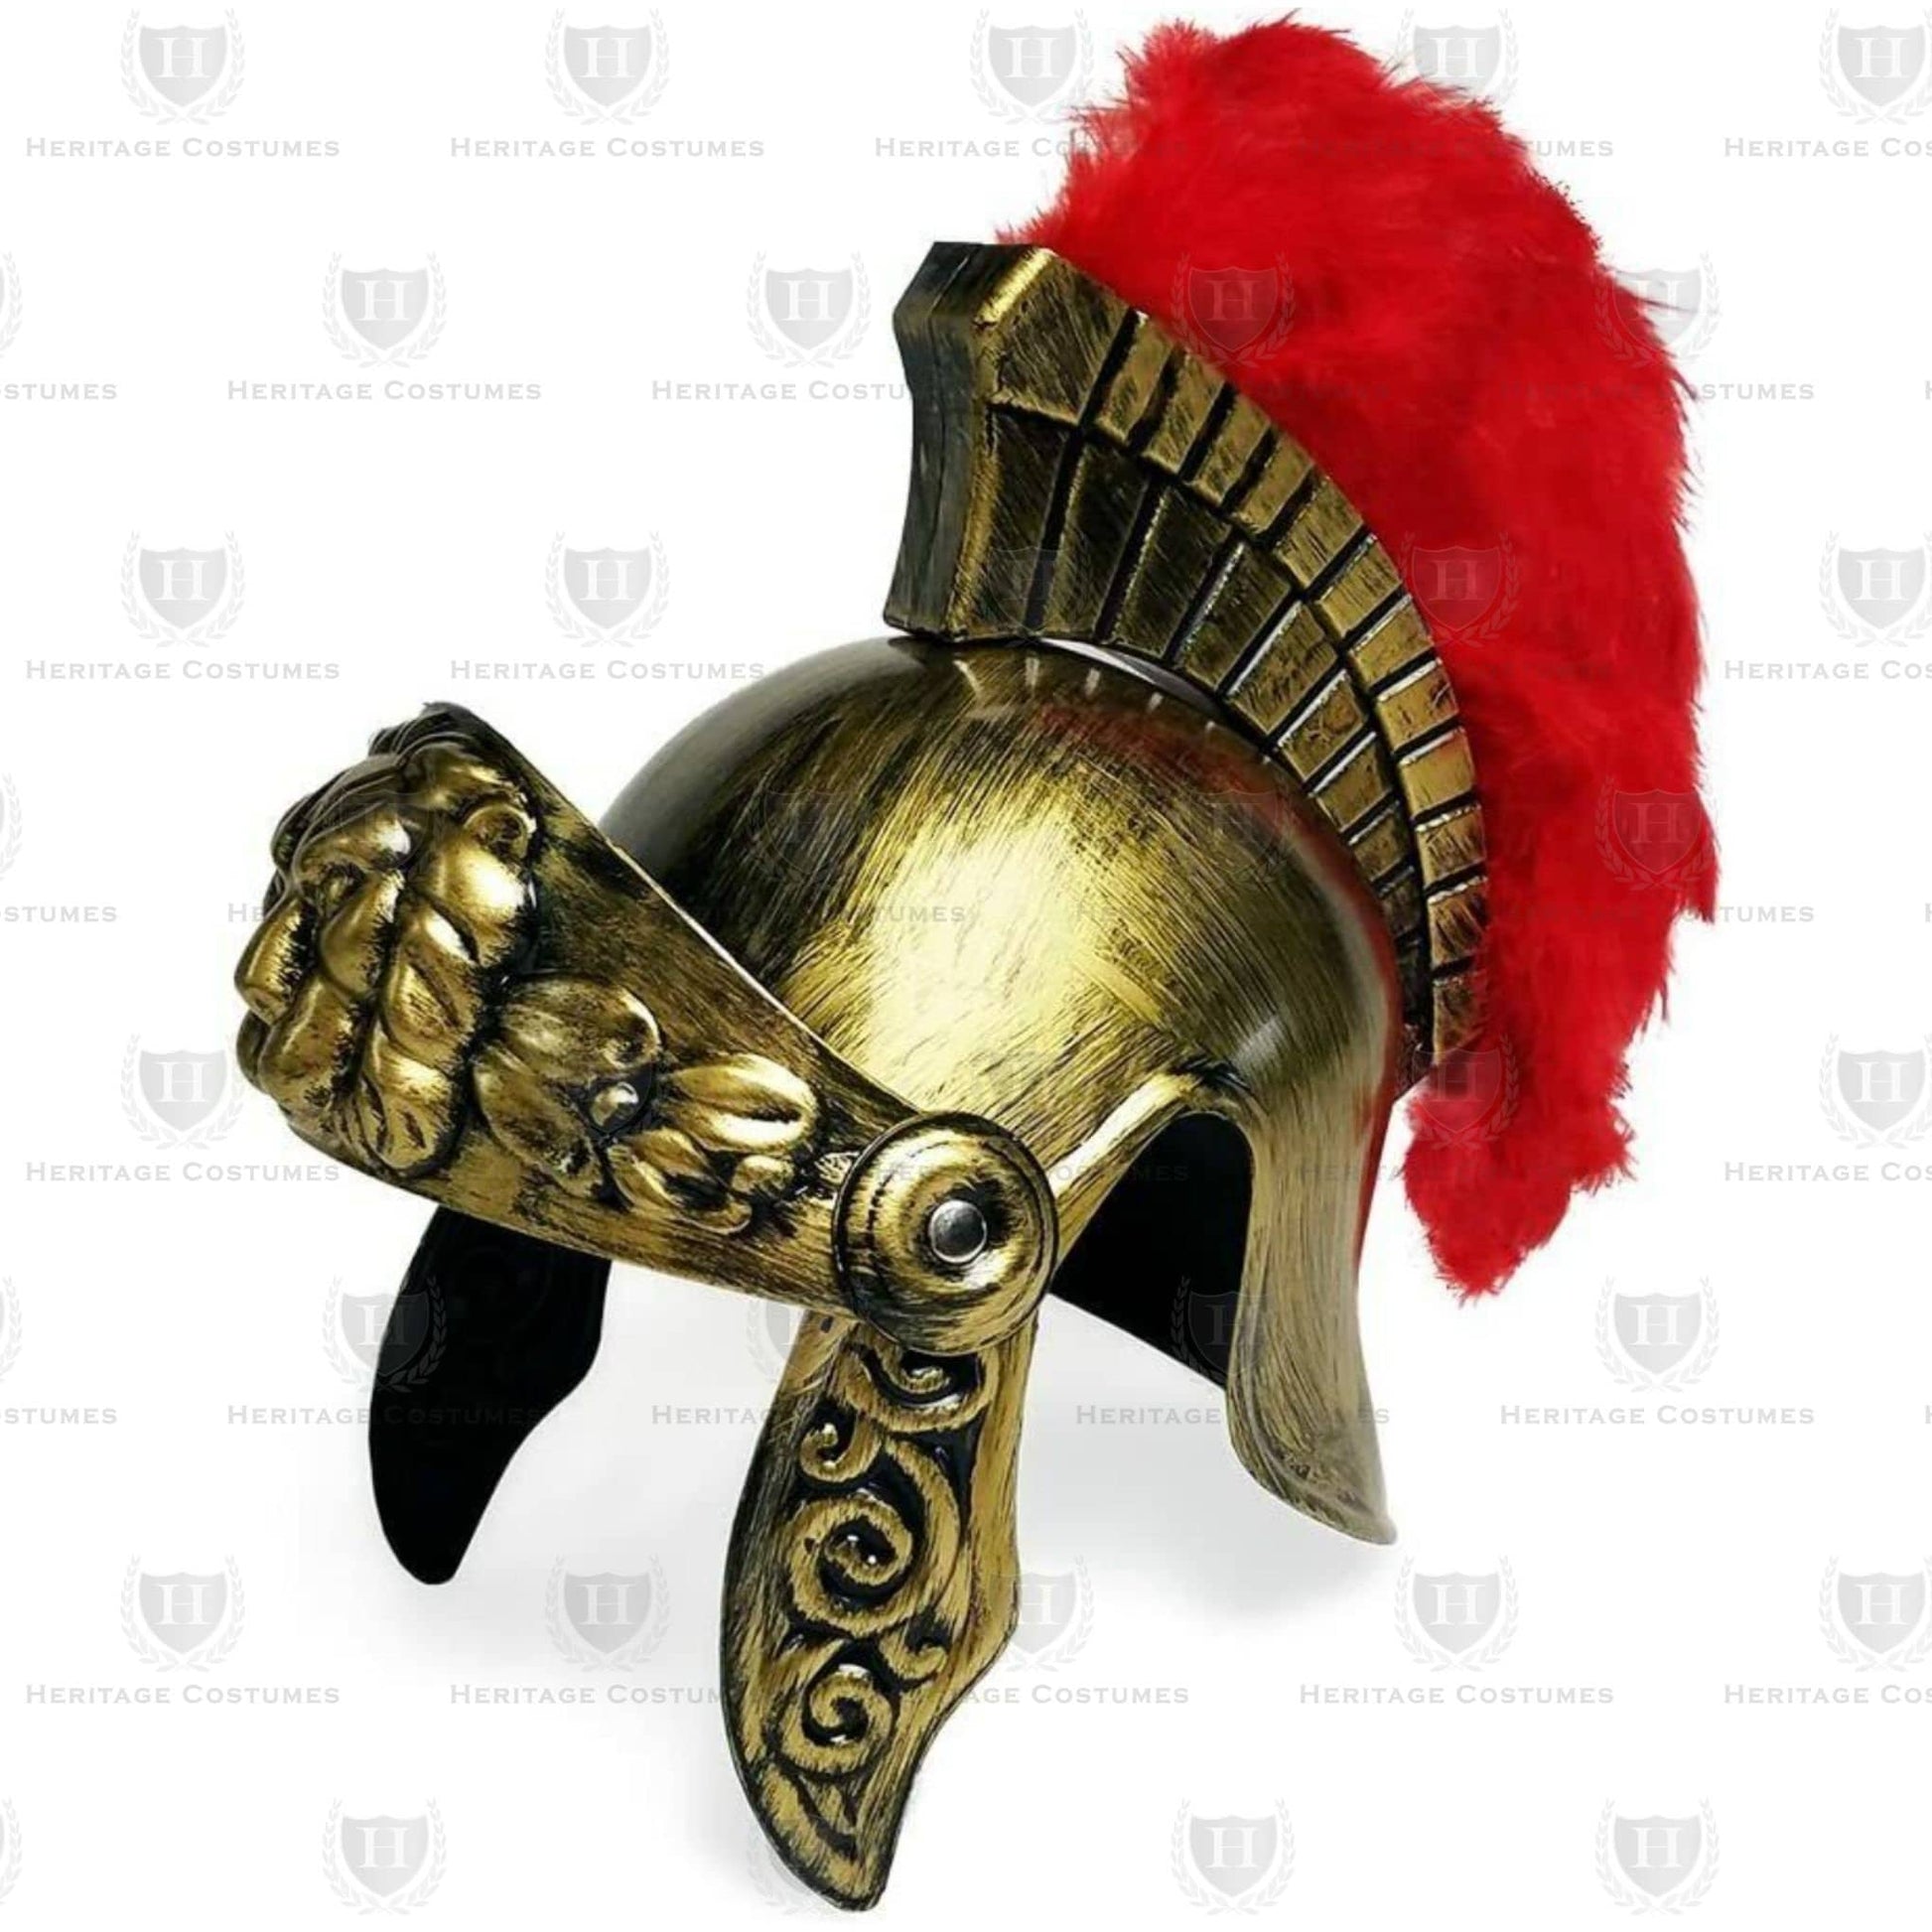 Roman Solider Costume, Roman Armor